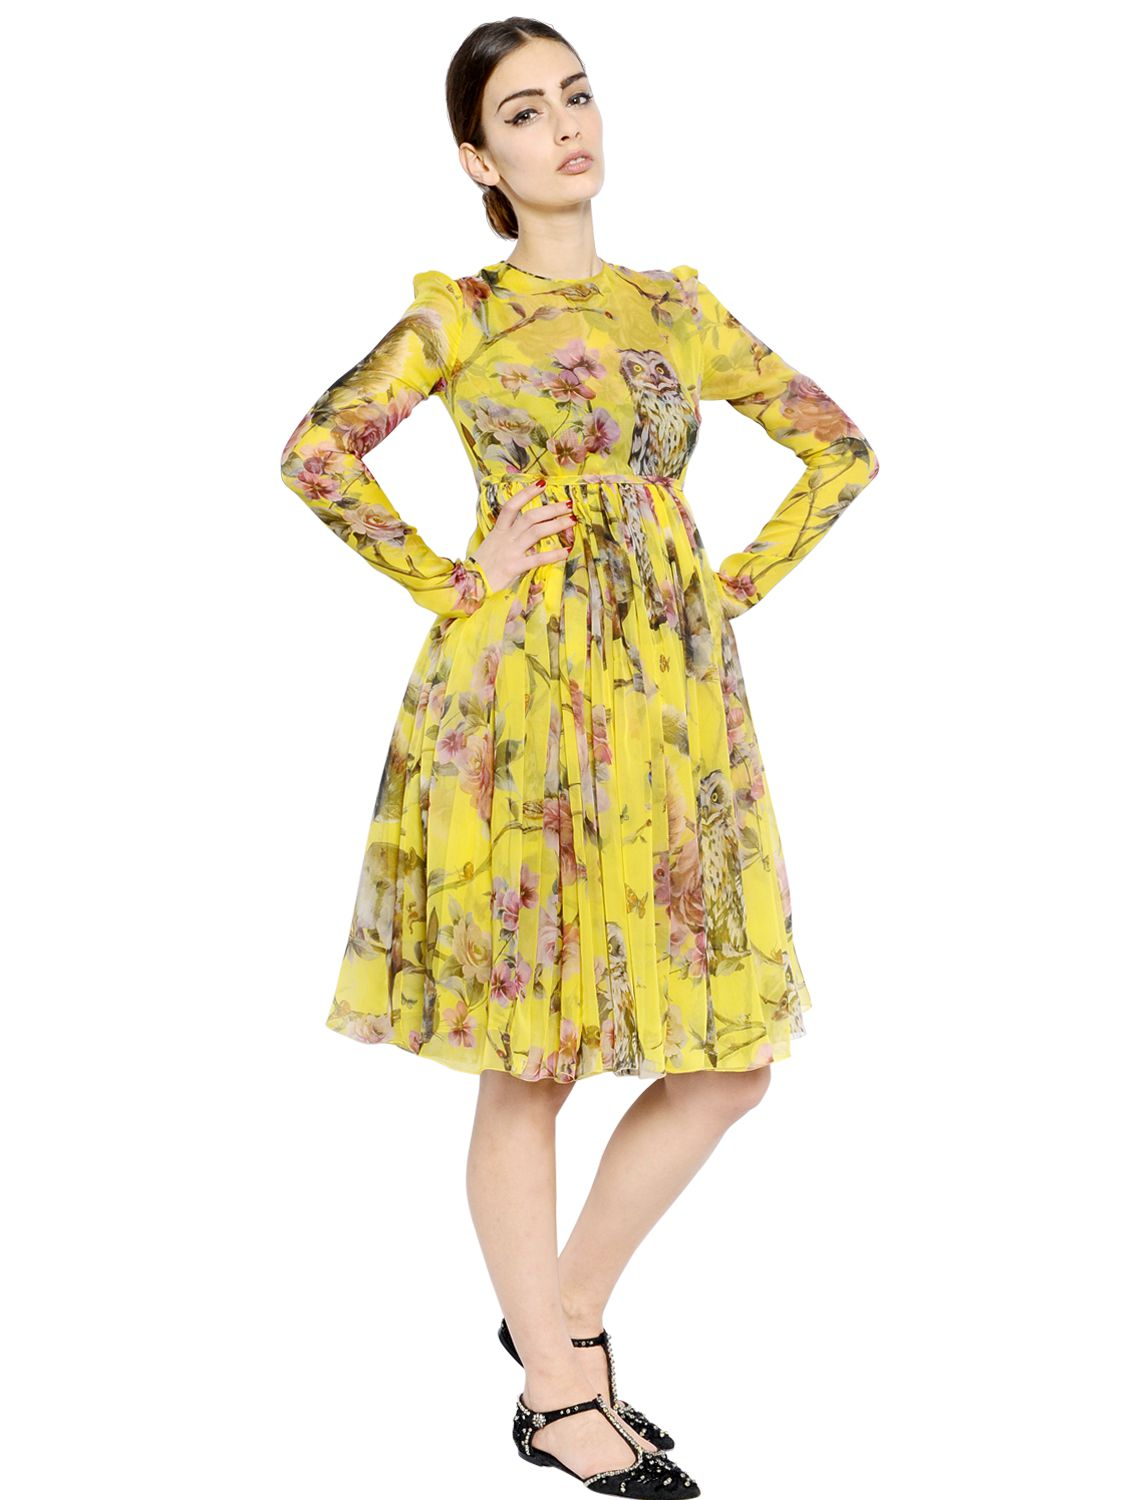 Lyst - Dolce & Gabbana Floral Printed Silk Chiffon Dress in Yellow